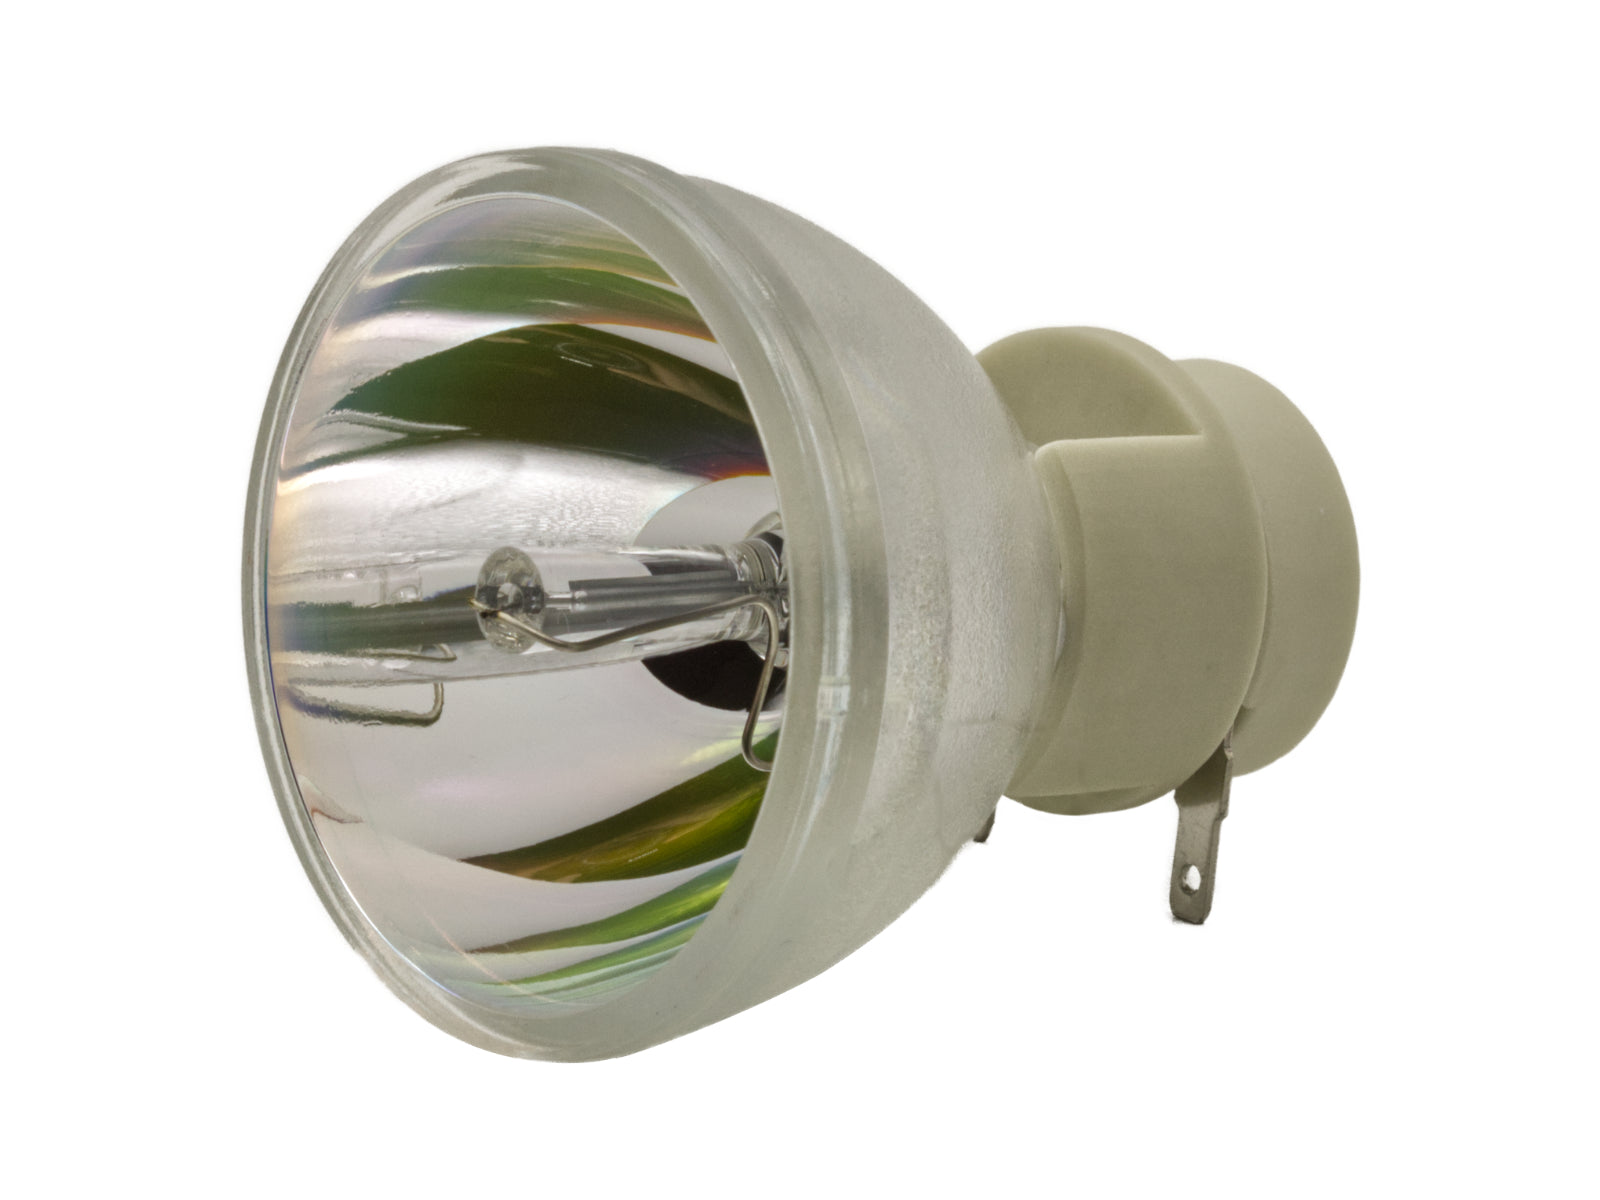 azurano BLB1 Beamerlampe für OSRAM PVIP 230/0.8 E20.8 Ersatzlampe für diverse Projektoren von ACER, BENQ, MITSUBISHI, NEC, OPTOMA, SMART BOARD, PROMETHEAN, THEMESCENE, 230W - Bild 1